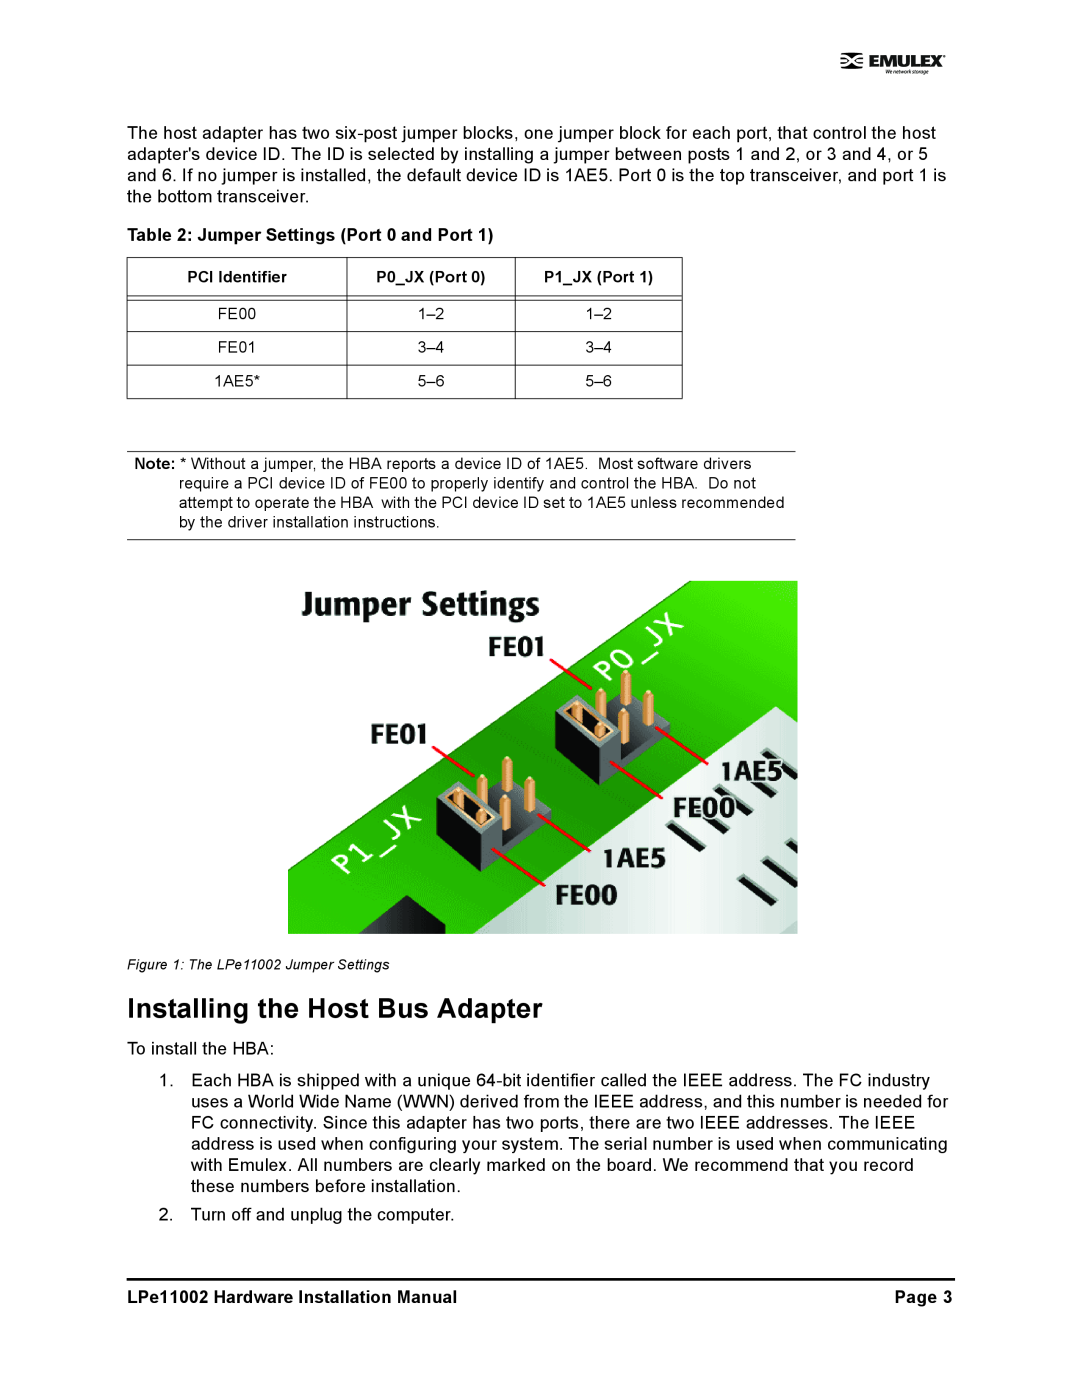 EMC LPE11002EG Installing the Host Bus Adapter, Jumper Settings Port 0 and Port, LPe11002 Hardware Installation Manual 